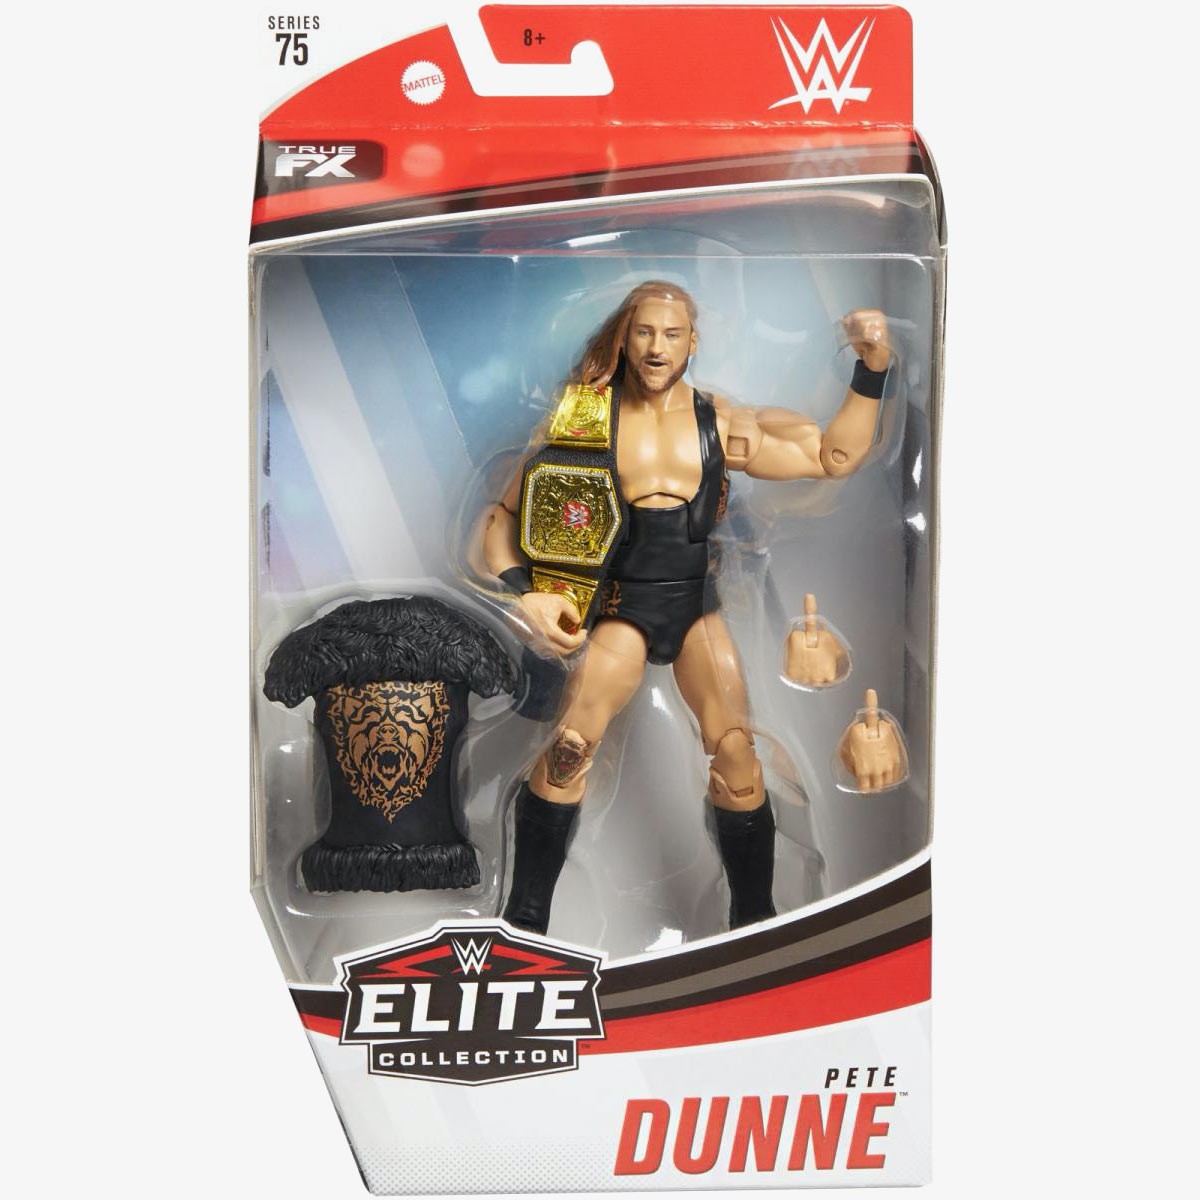 Pete Dunne WWE Elite Collection Series #75 – wrestlingshop.com